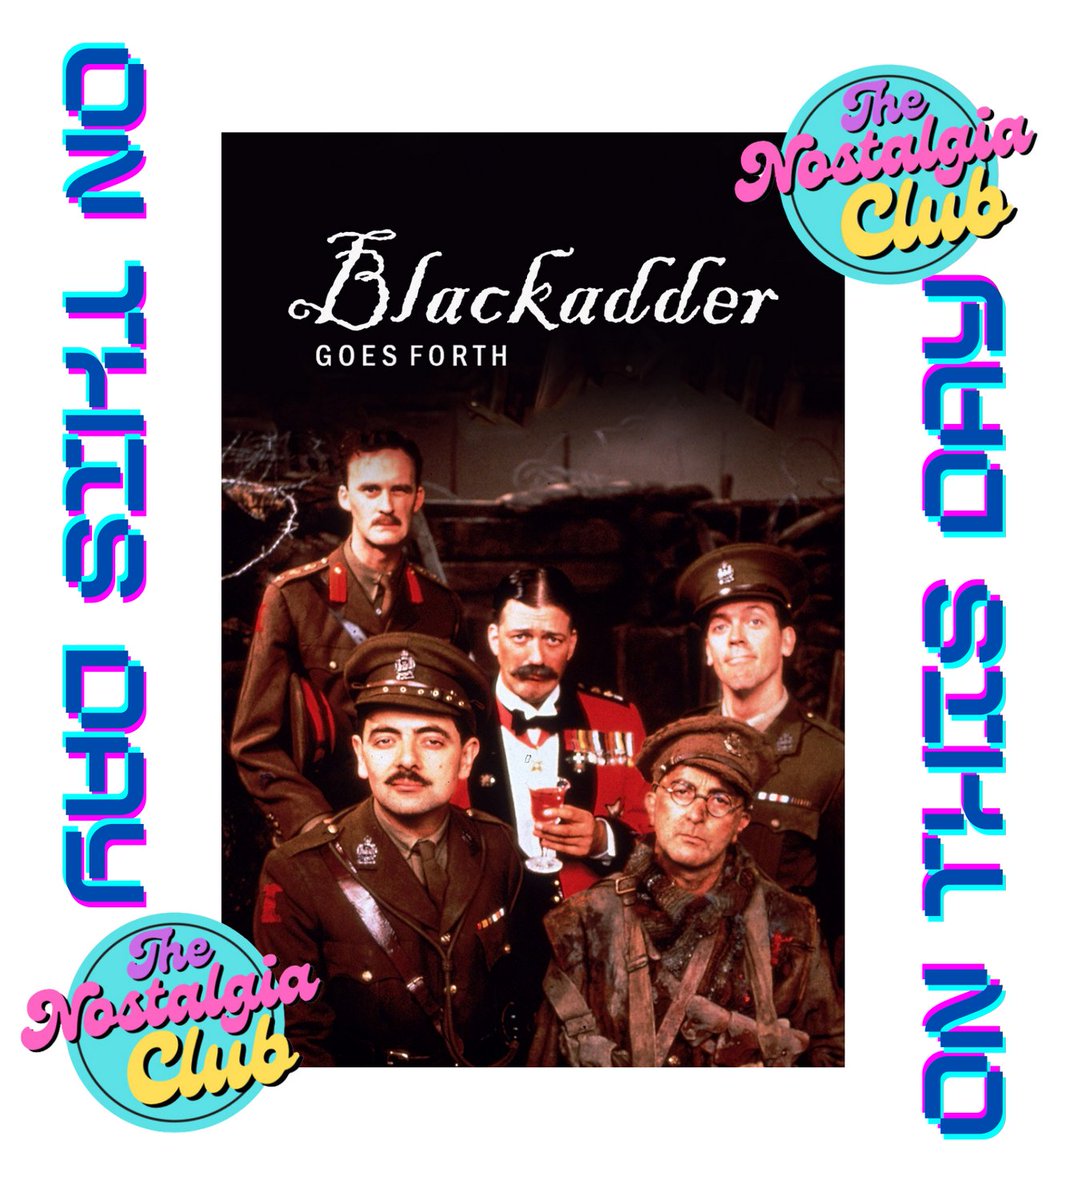 The final episode of Blackadder Goes Forth - 'Goodbyee' aired on the BBC on this day in 1989.

#1980s #Blackadder #80s #80sTV #BritishTV #BBC #Nostalgic #Nostalgia #Classic #ClassicTV